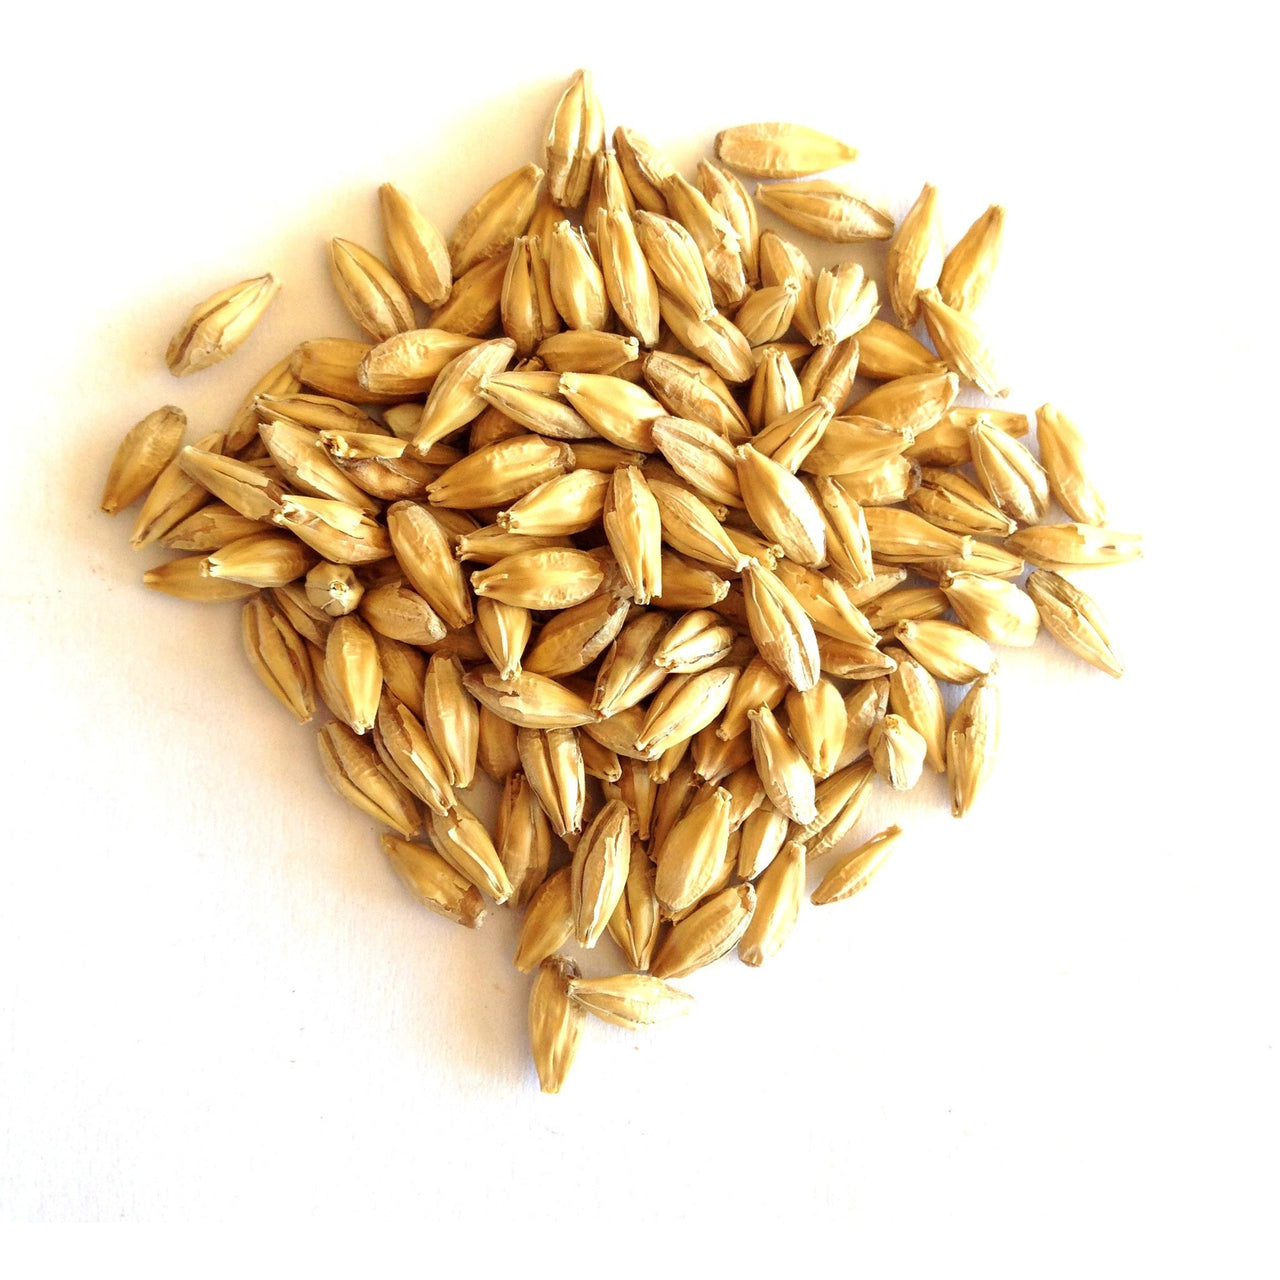 Malted Barley Grain for SST - Certified Organic